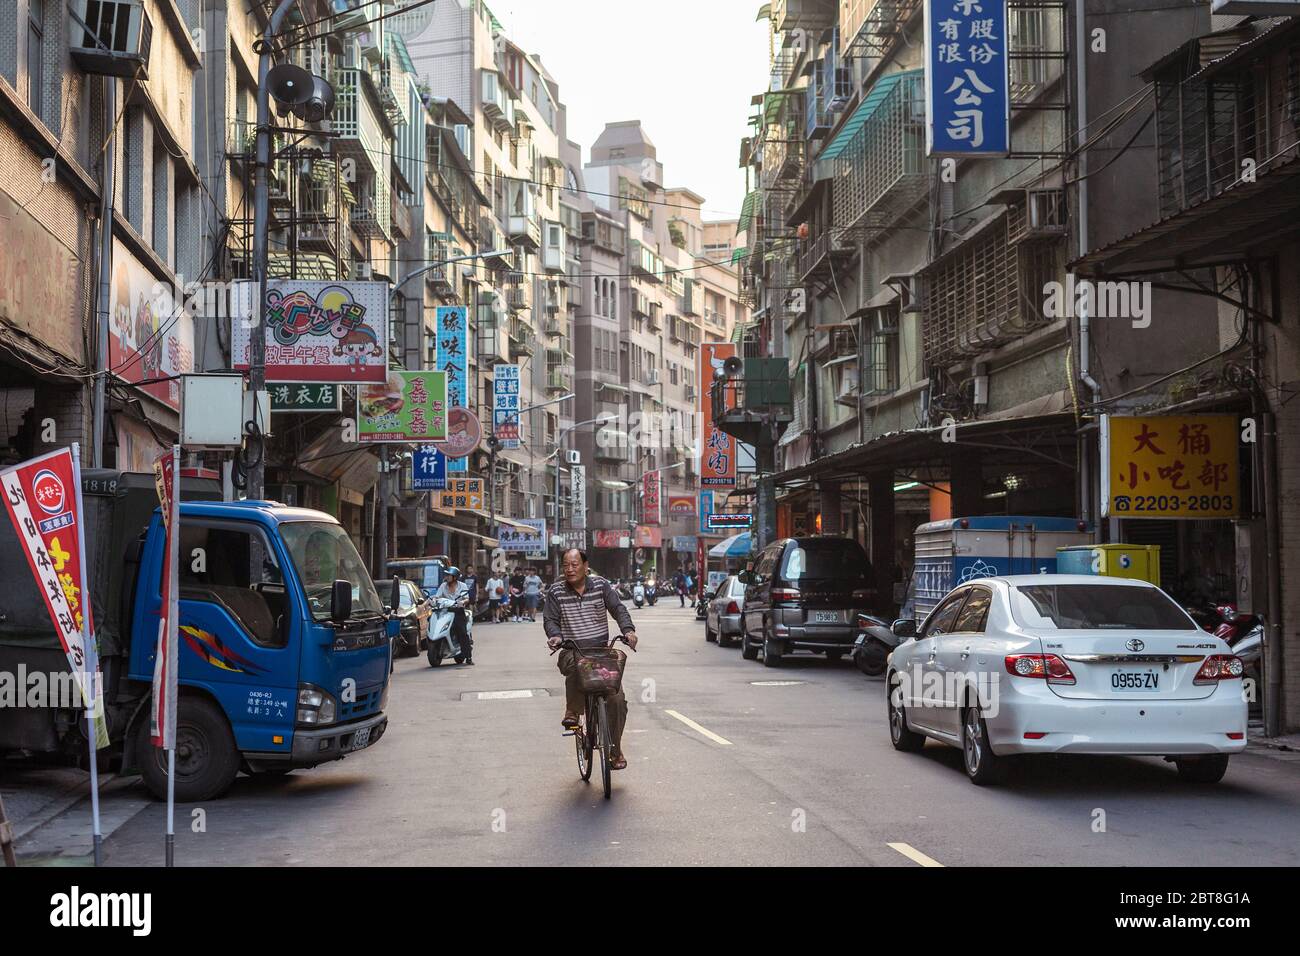 Taipei / Taiwan - December 12, 2018: senior man riding bicycle along scenic street with multitude of buildings Stock Photo